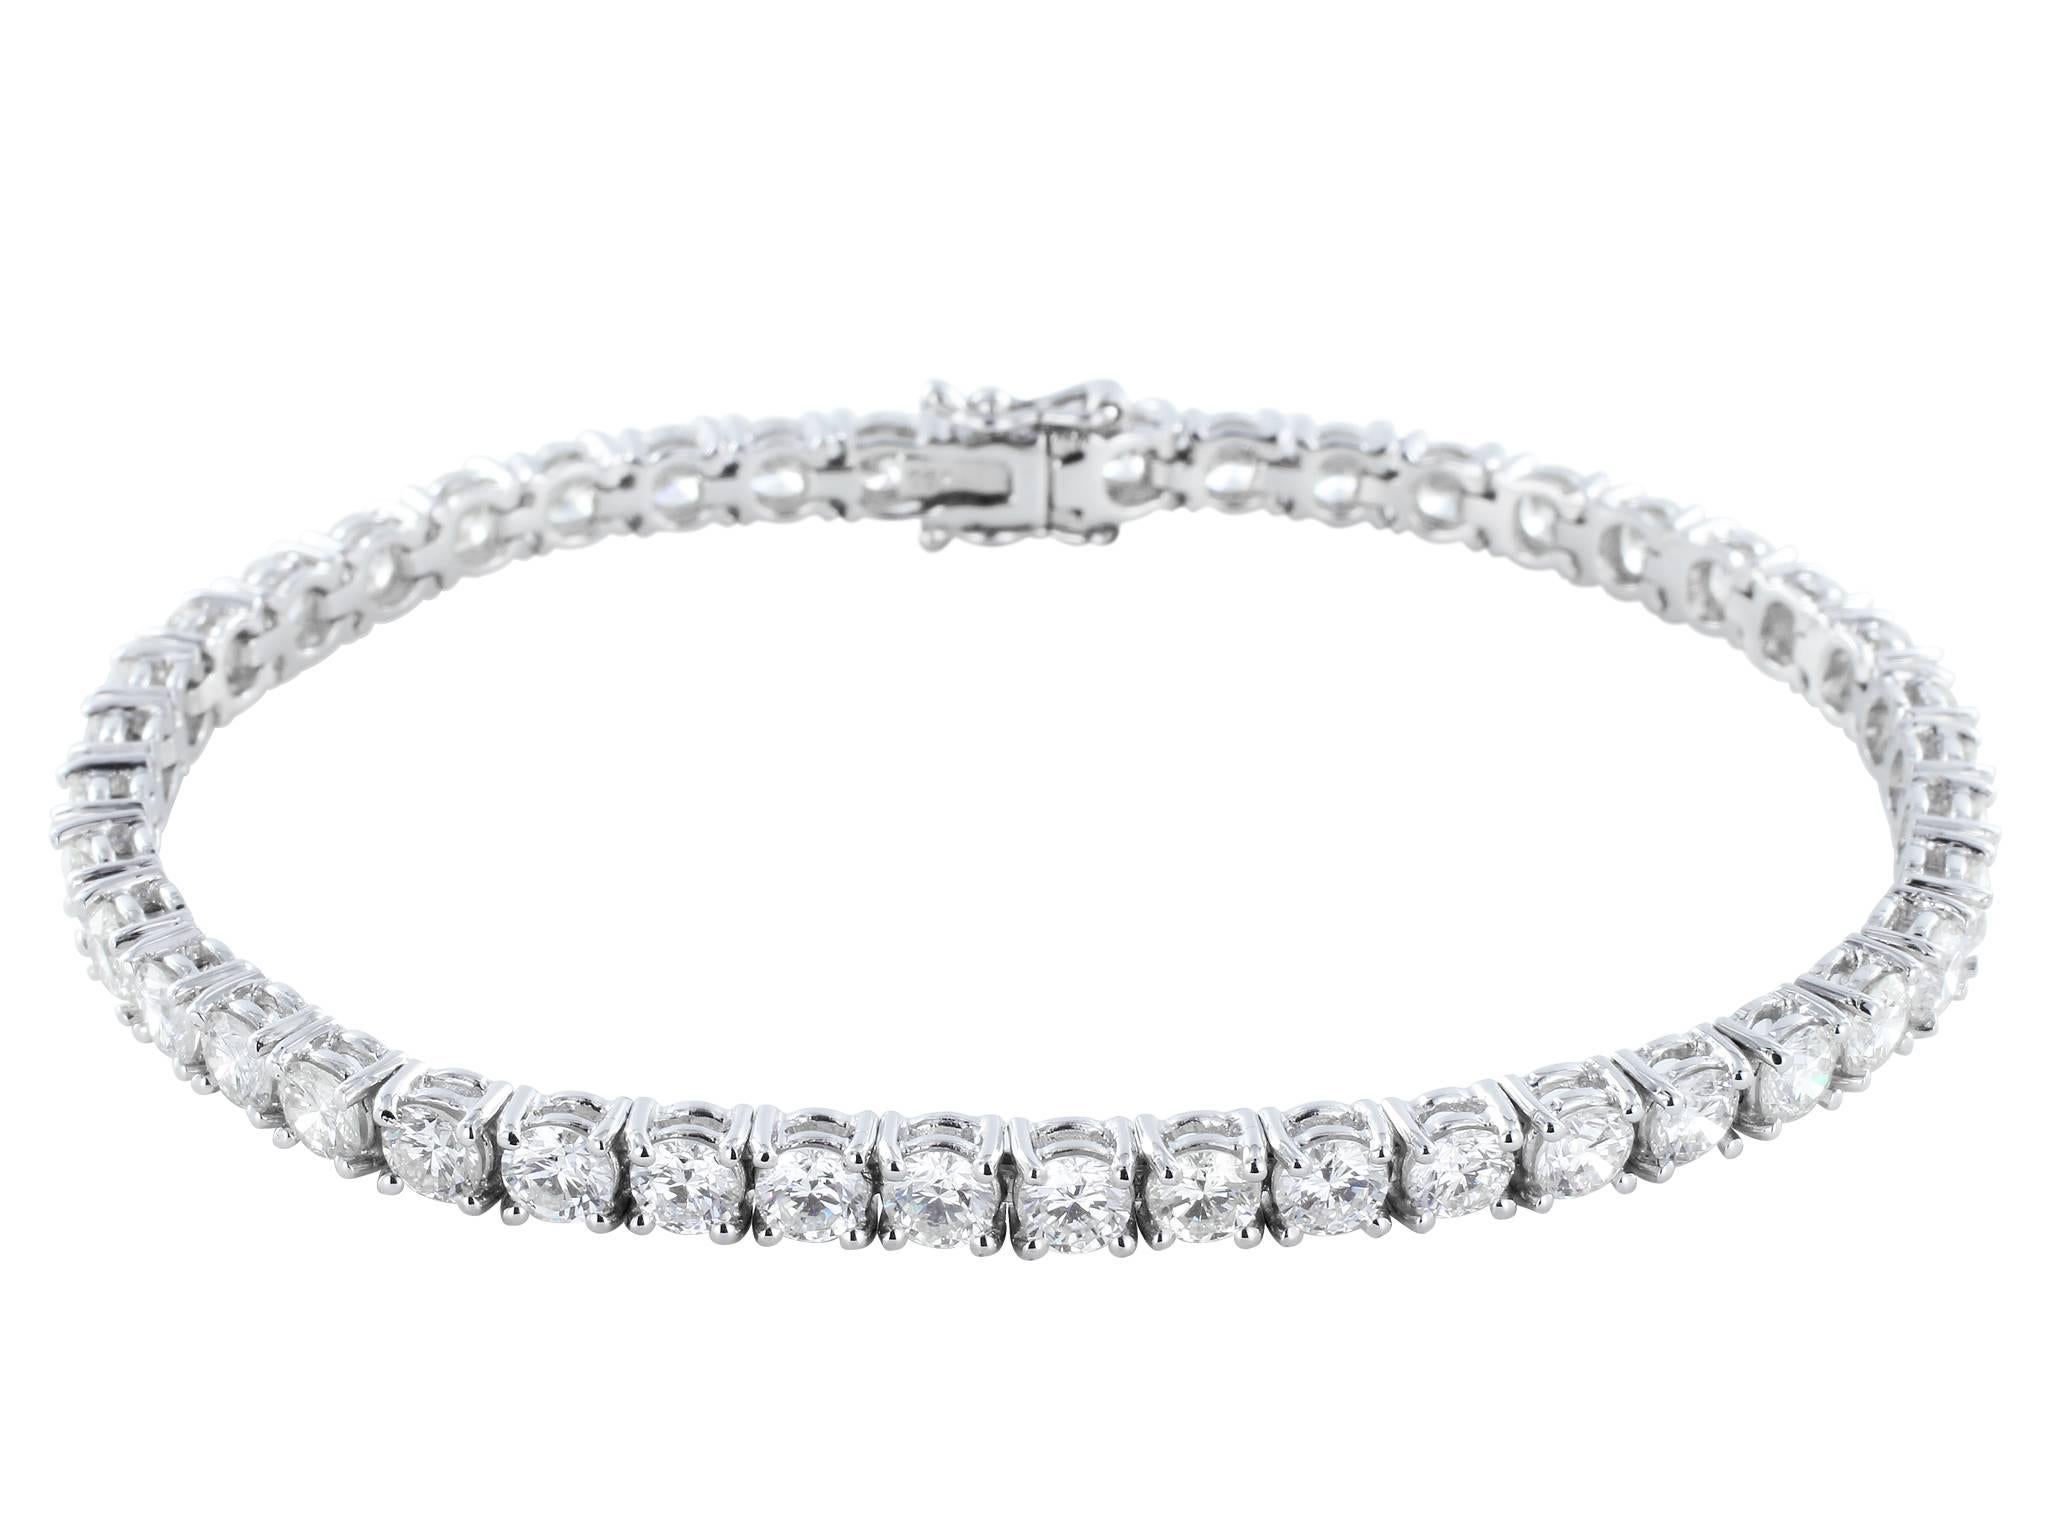 18 karat white gold diamond tennis bracelet consisting of 7.59 carats total weight of round brilliant cut diamonds.